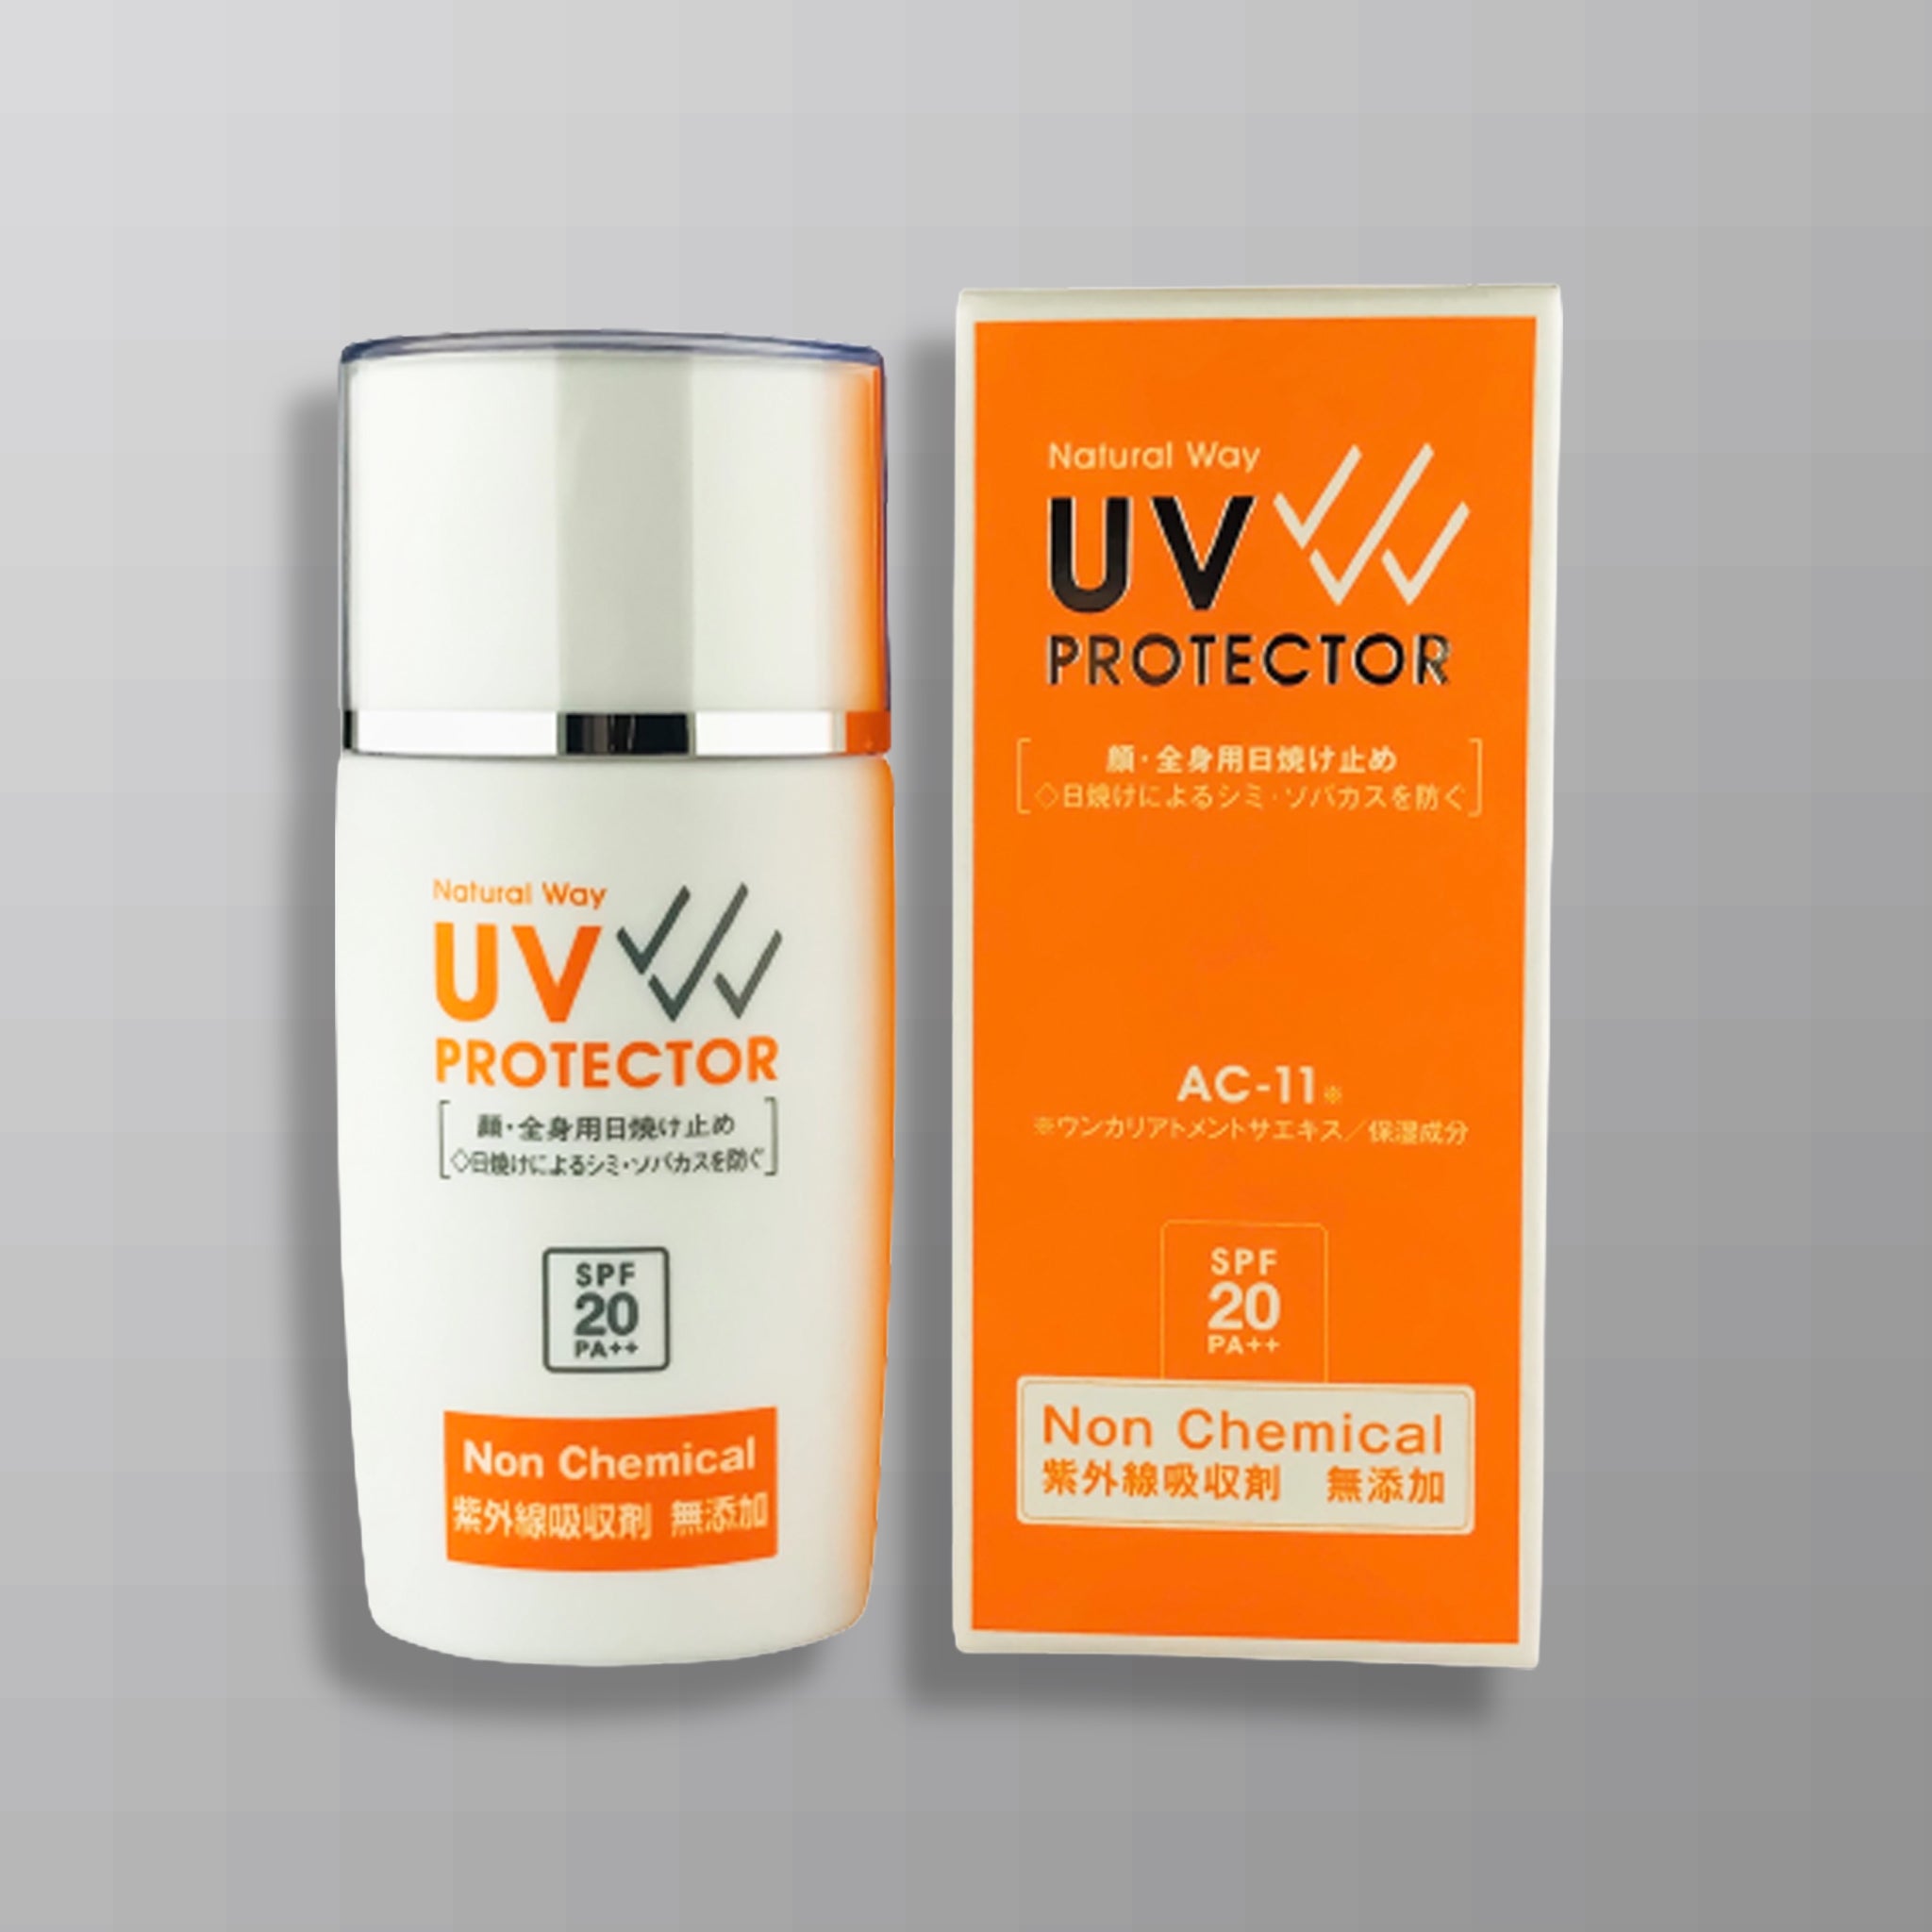 Natural Way UV PROTECTOR Non-Chemical 35mL (Sunscreen